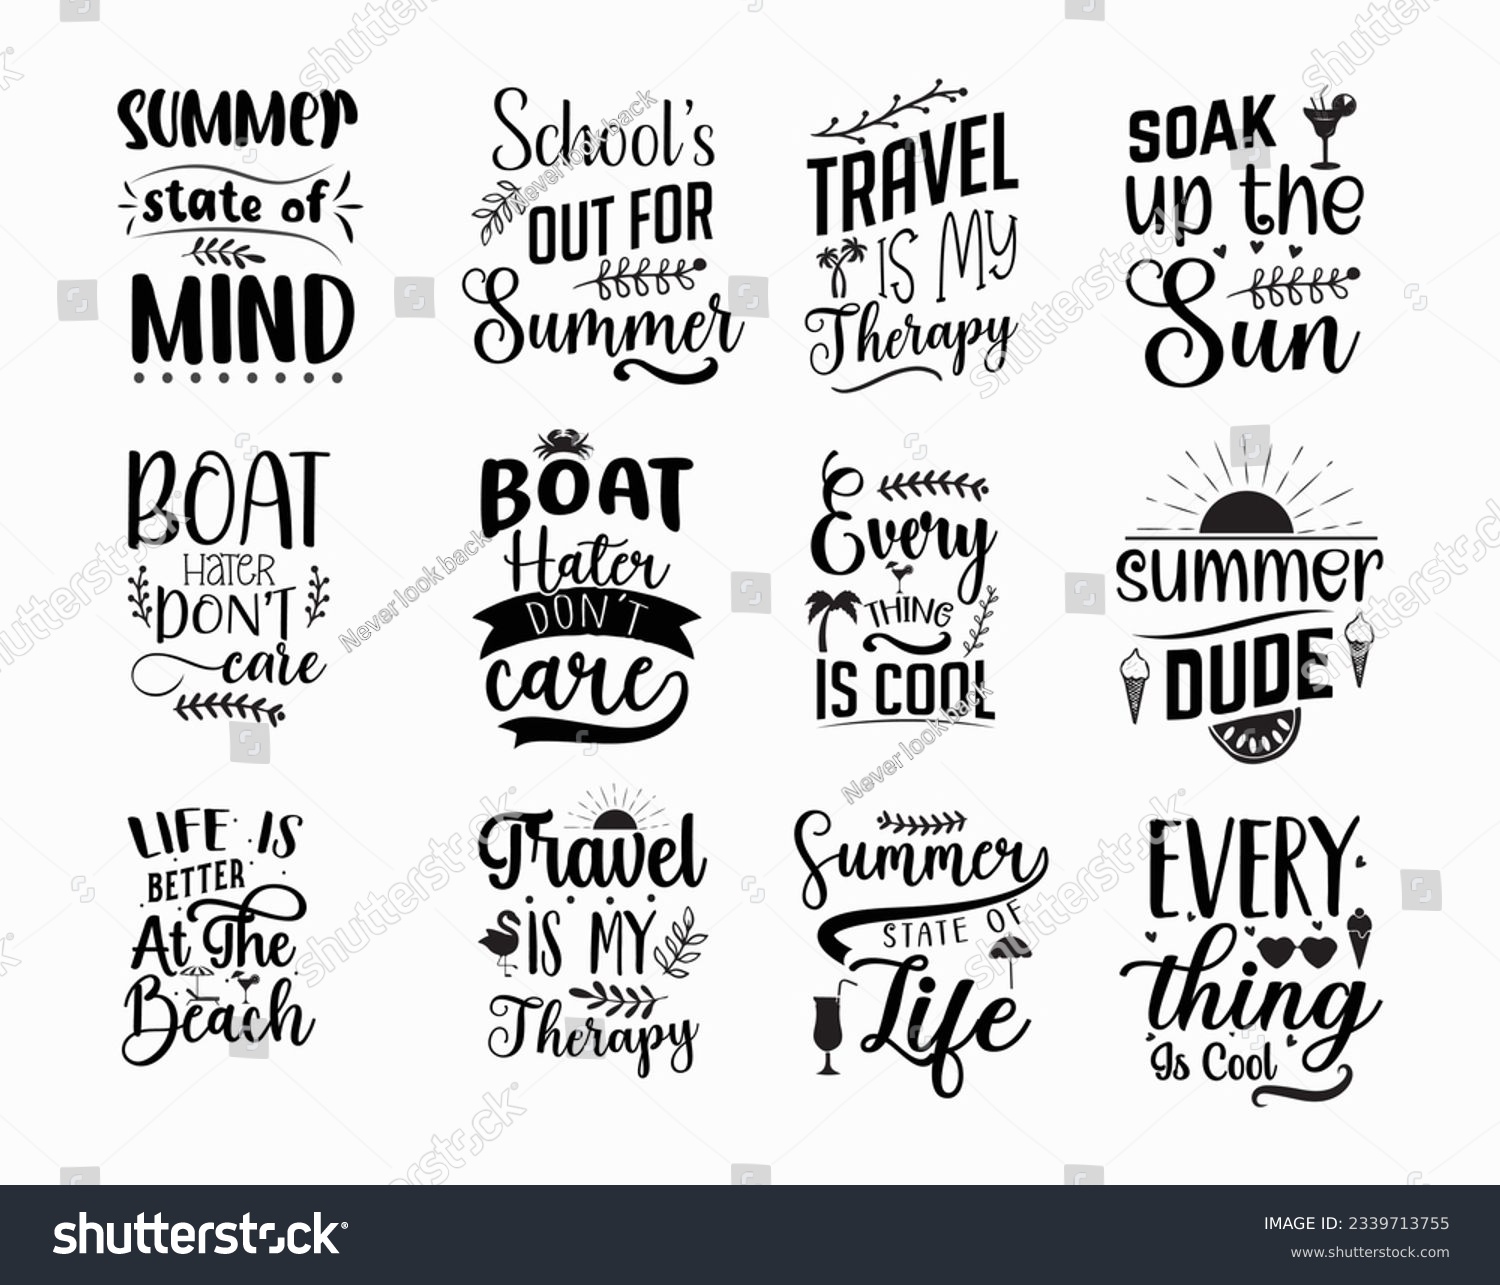 SVG of Summer SVG Bundle, T-shirt Design , Summer typography t shirt design vector ,Summer Bundle SVG Cut File, Beach Life SVG, Sweet Summertime Quote Design, Summer SVG design, White background svg